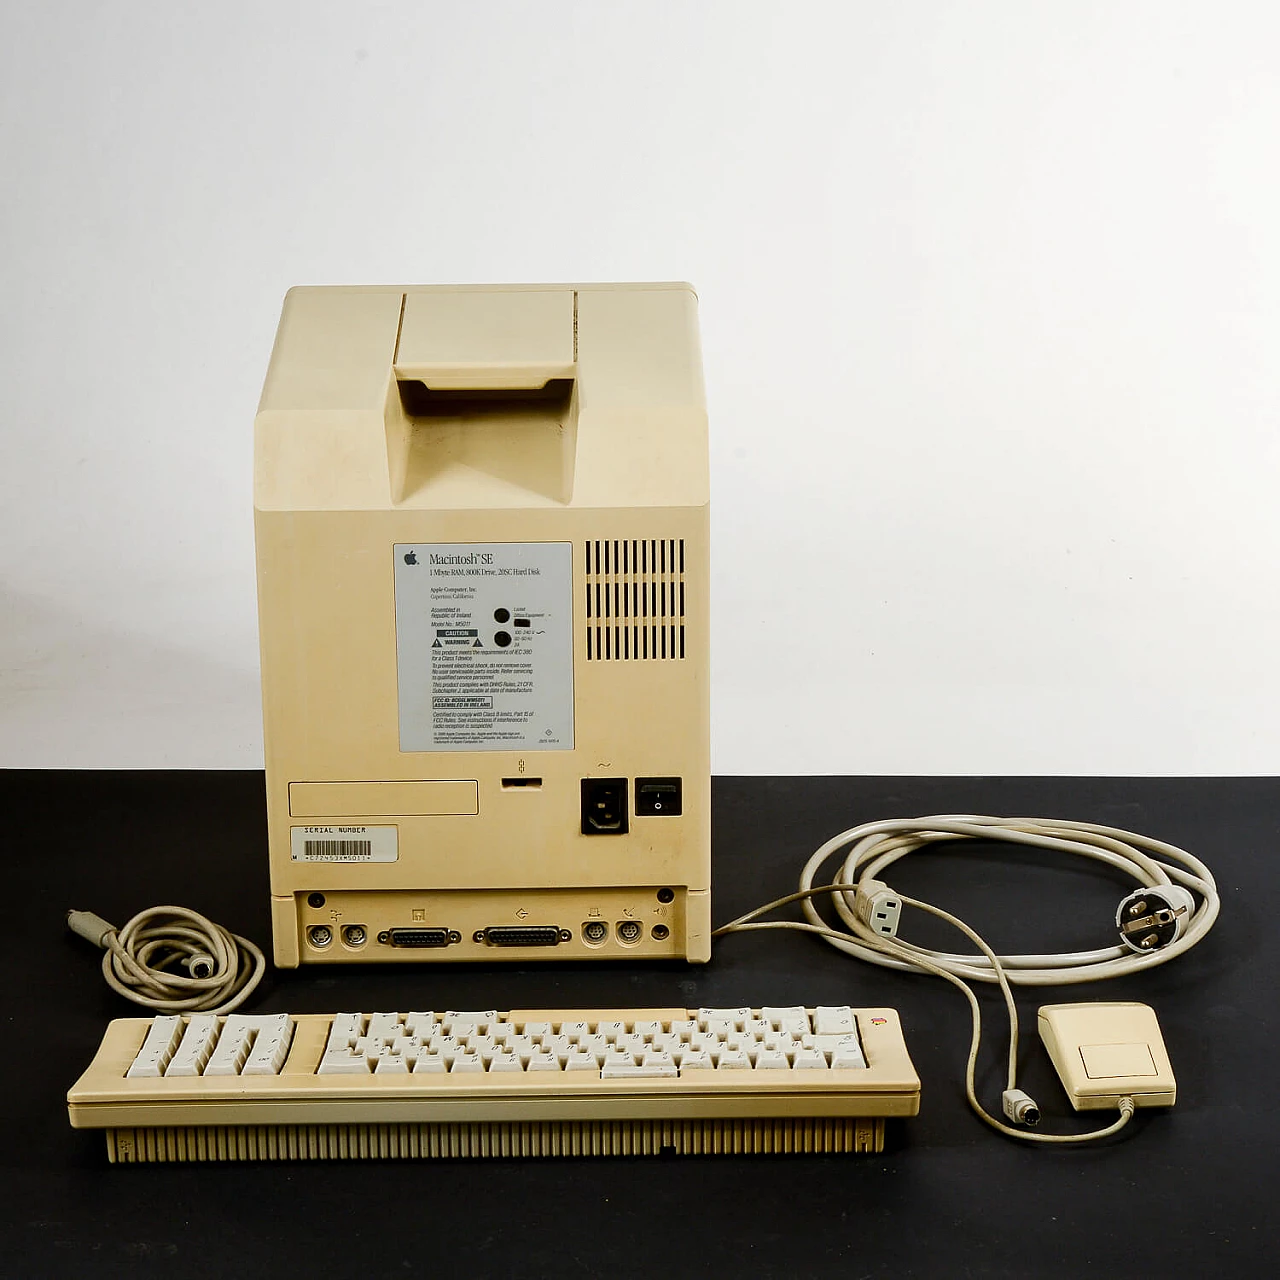 Macintosh SE by Apple Inc., 1980s 4